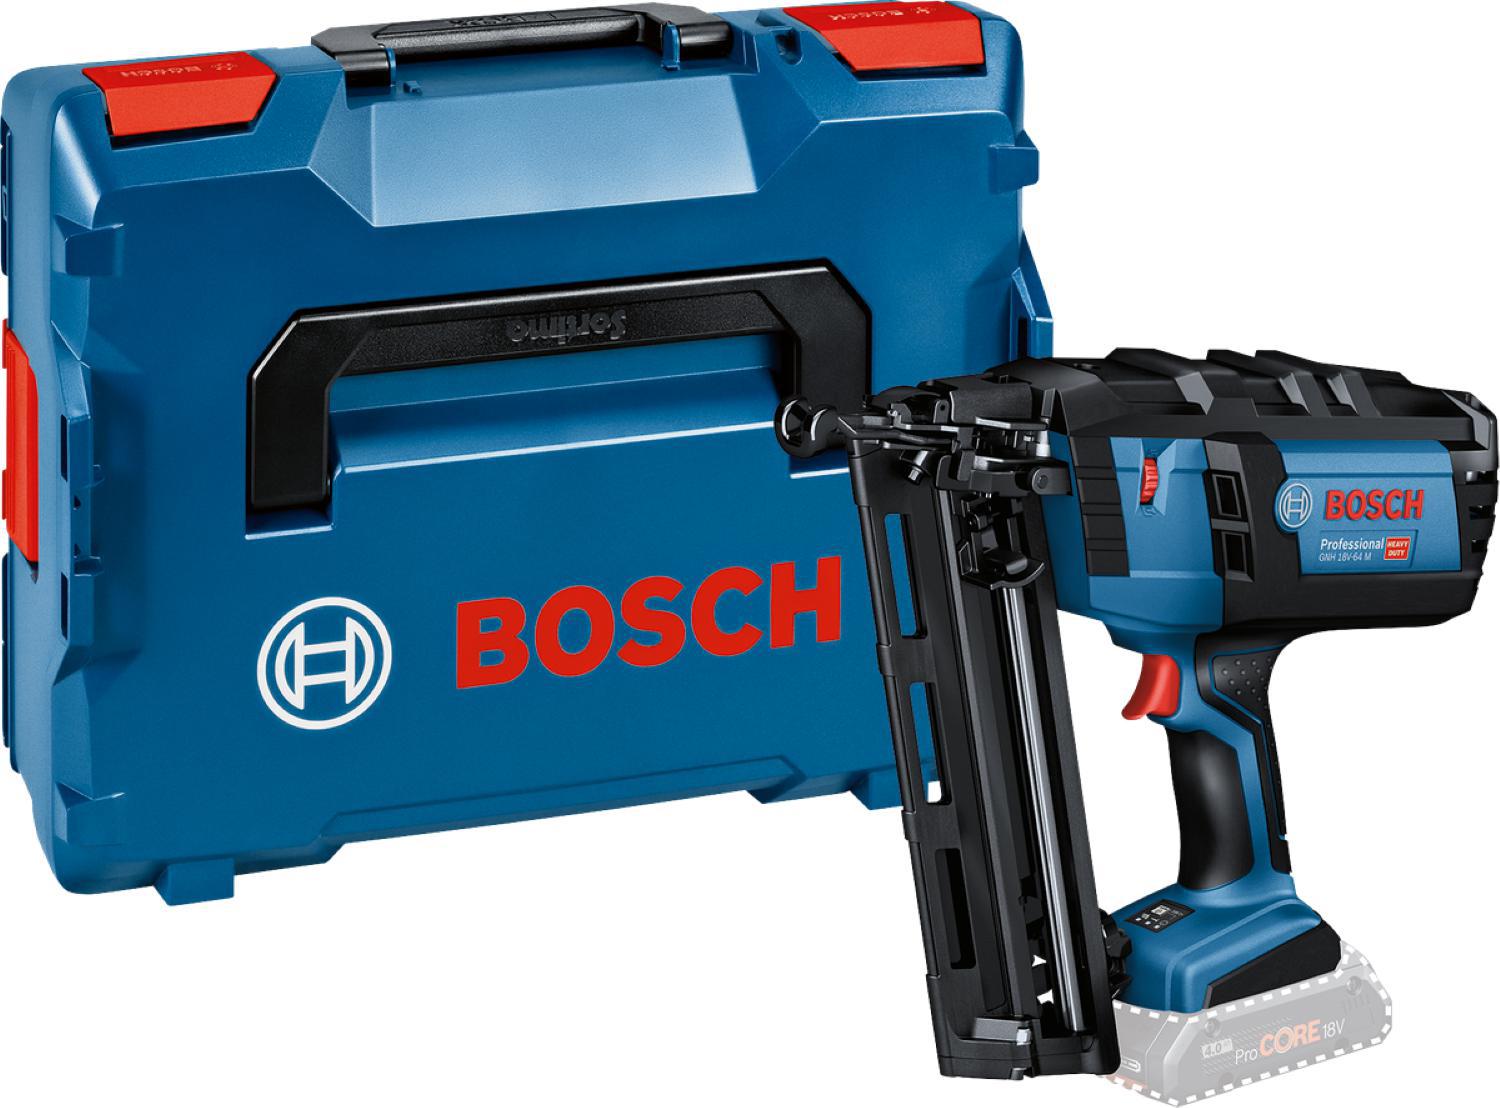 Bosch Professional GNH 18V-64 M Afwerktacker 16Ga Basic Body L-BOXX - 0601481001 kopen? |